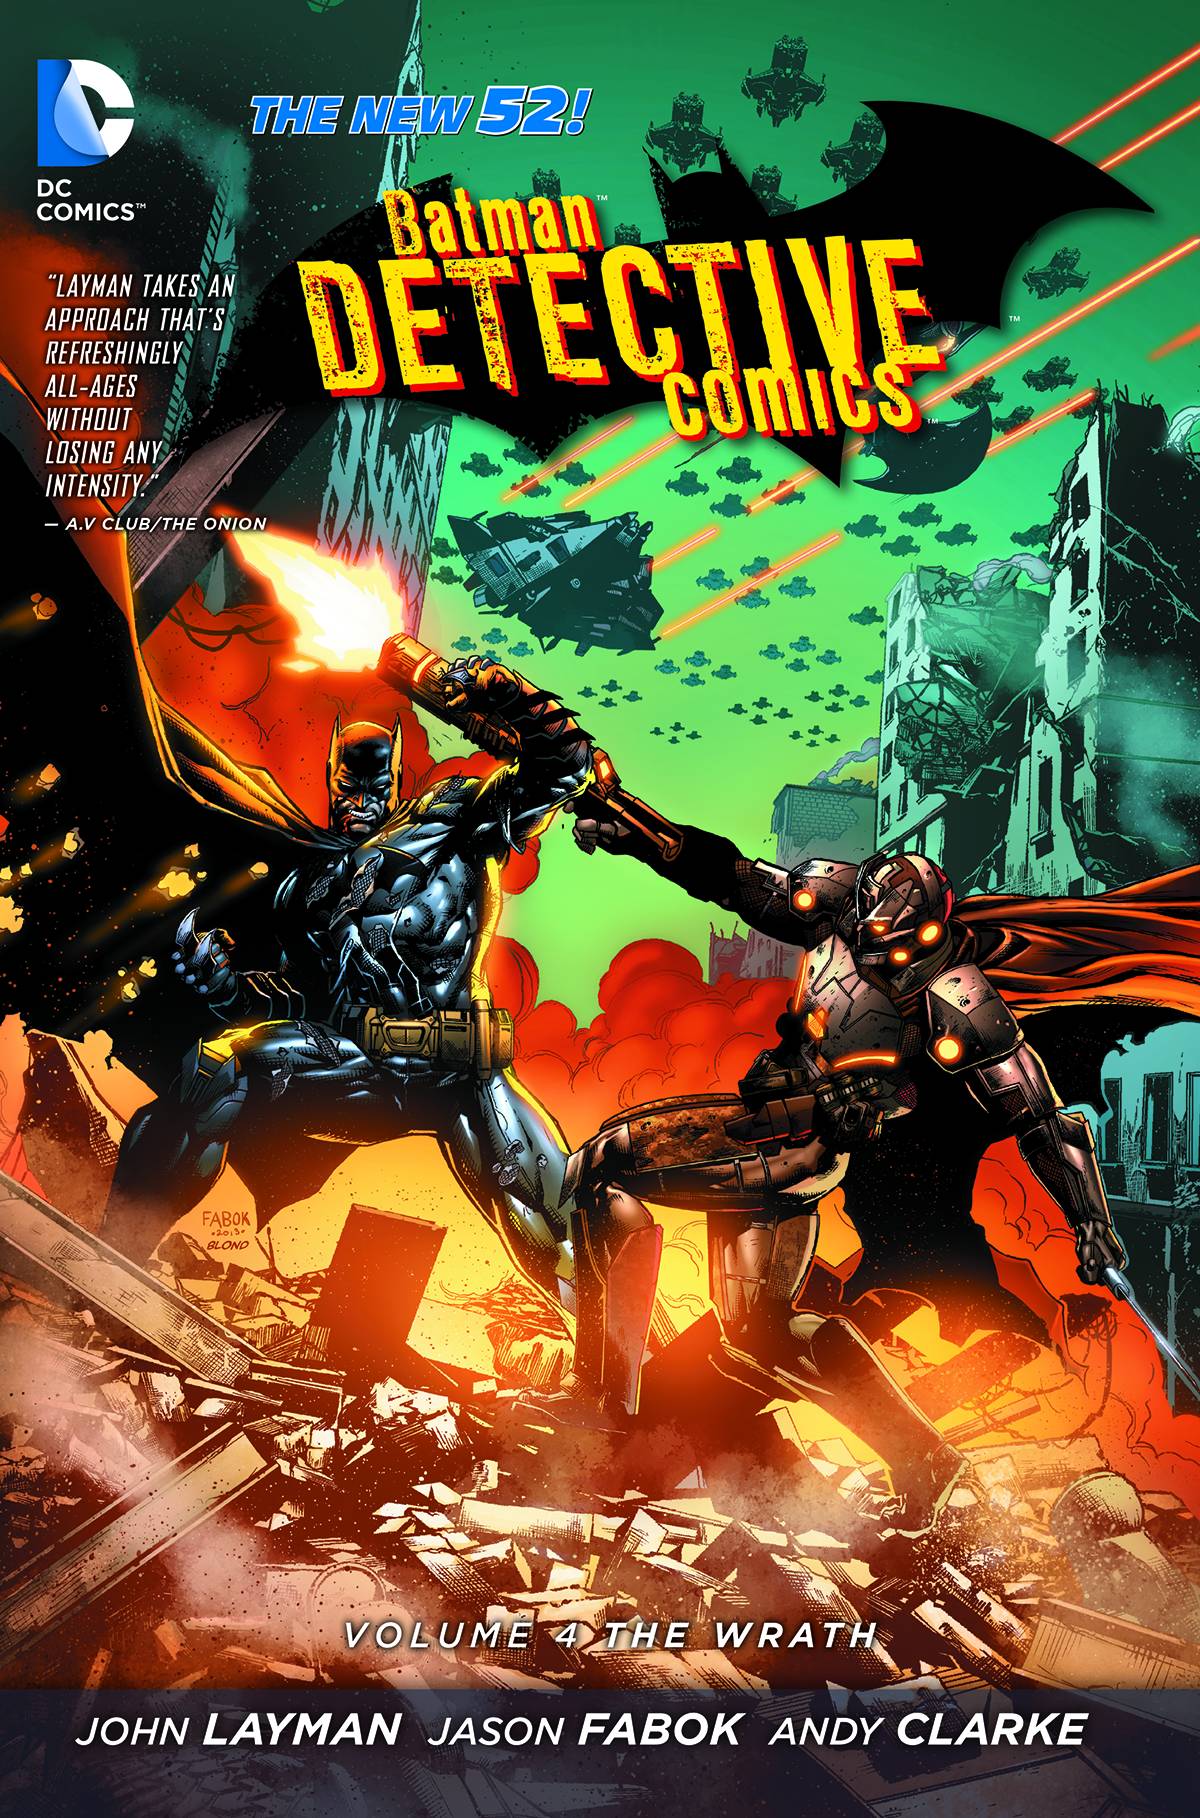 Batman Detective Comics Graphic Novel Volume 4 the Wrath (New 52)